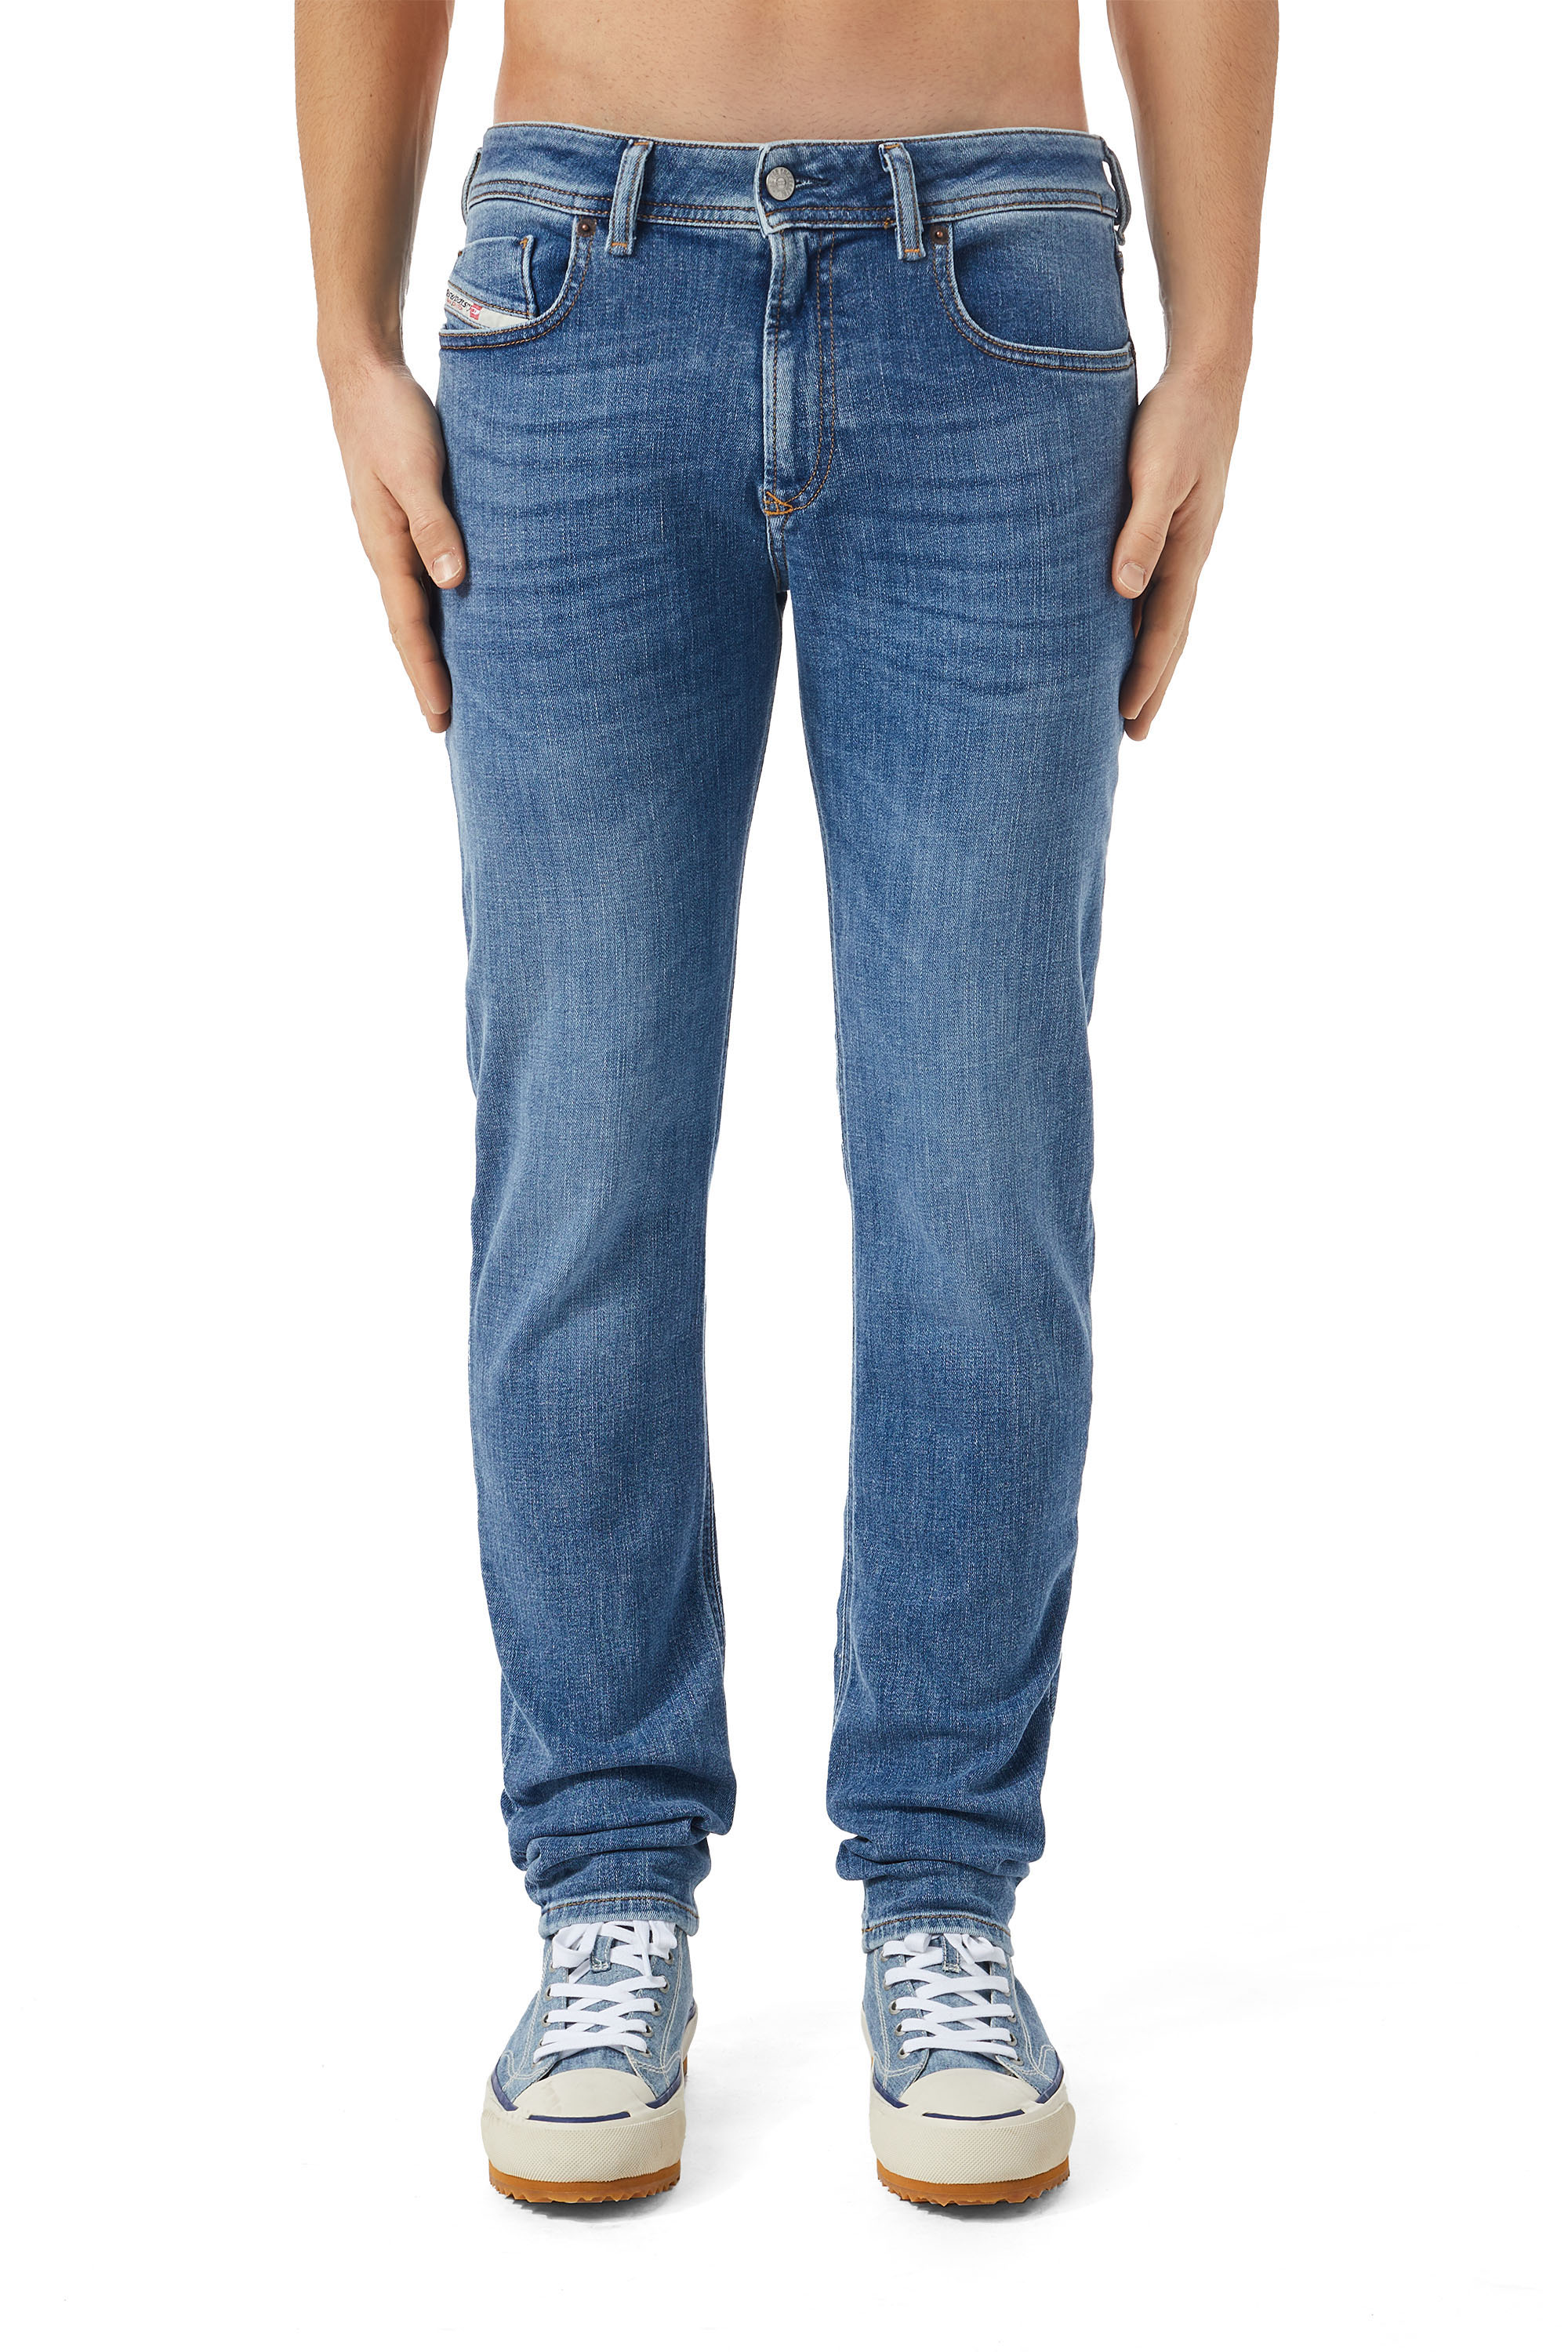 1979 SLEENKER 09C01 Skinny Jeans, Medium blue - Jeans